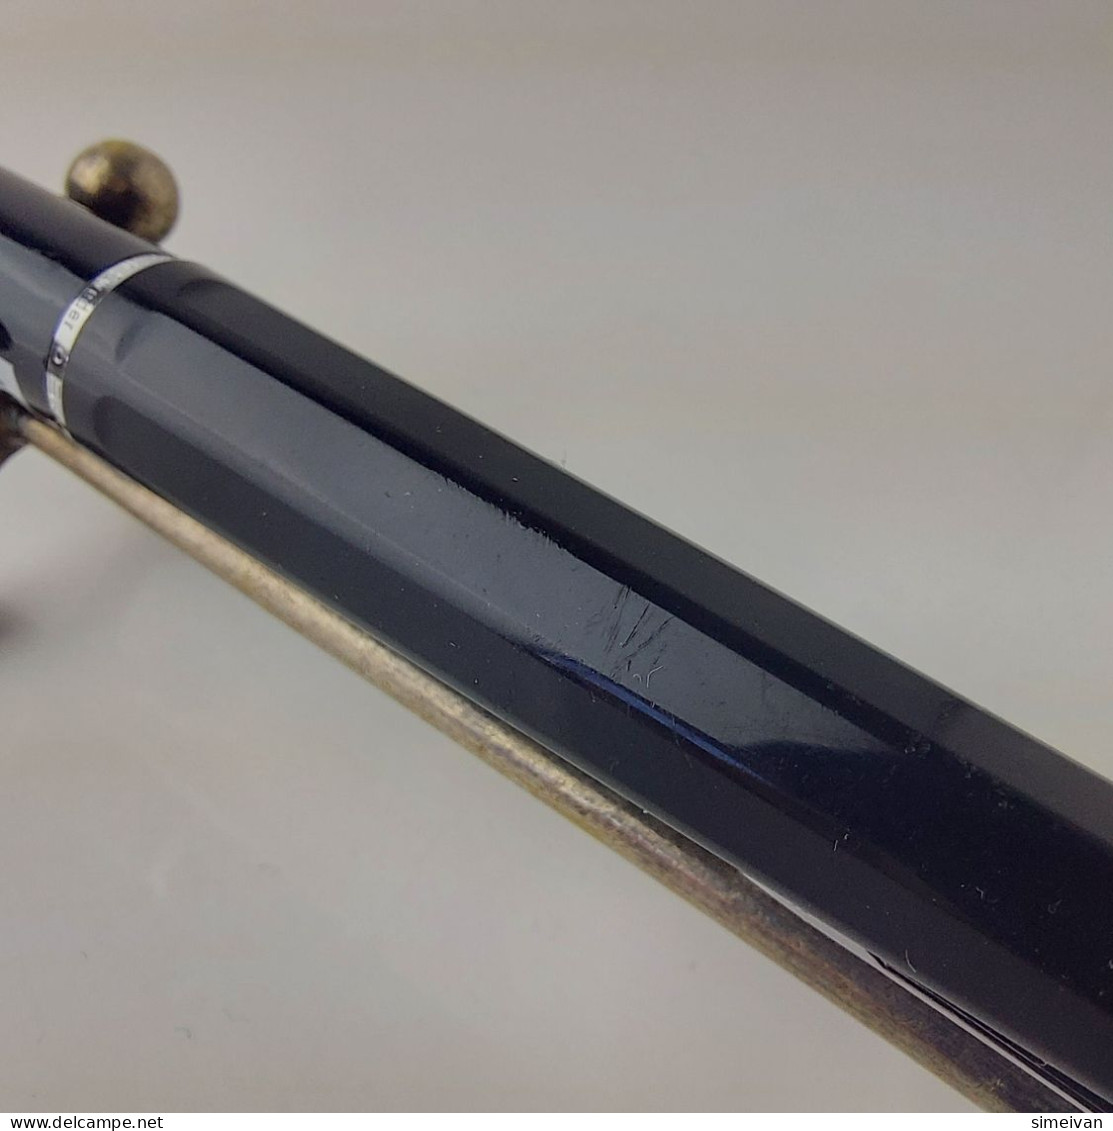 Vintage Ballograf Epoca Ballpoint Pen Black Chrome Trim Made in Sweden #5525